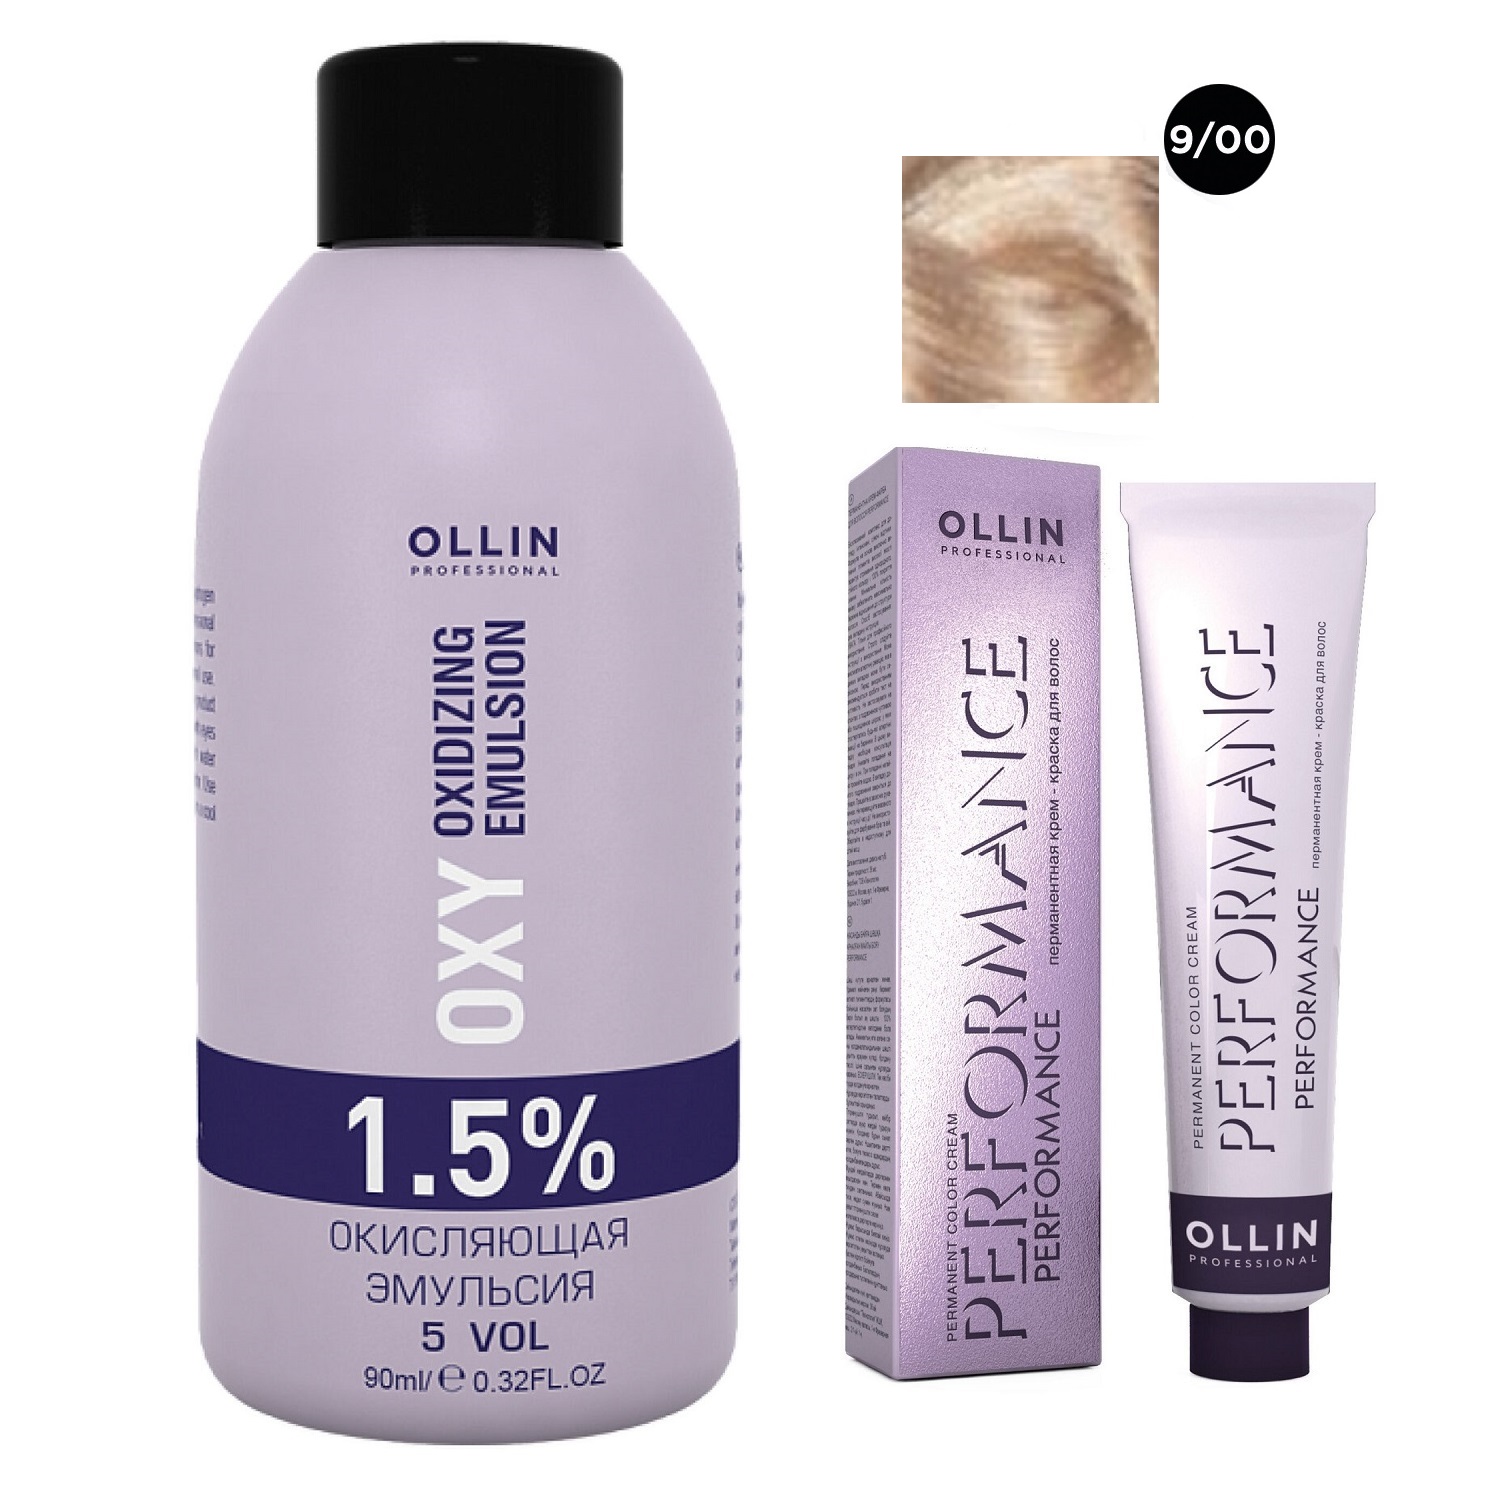 Ollin Professional Набор Перманентная крем-краска для волос Ollin Performance оттенок 9/00 блондин глубокий 60 мл + Окисляющая эмульсия Oxy 1,5% 90 мл (Ollin Professional, Performance)